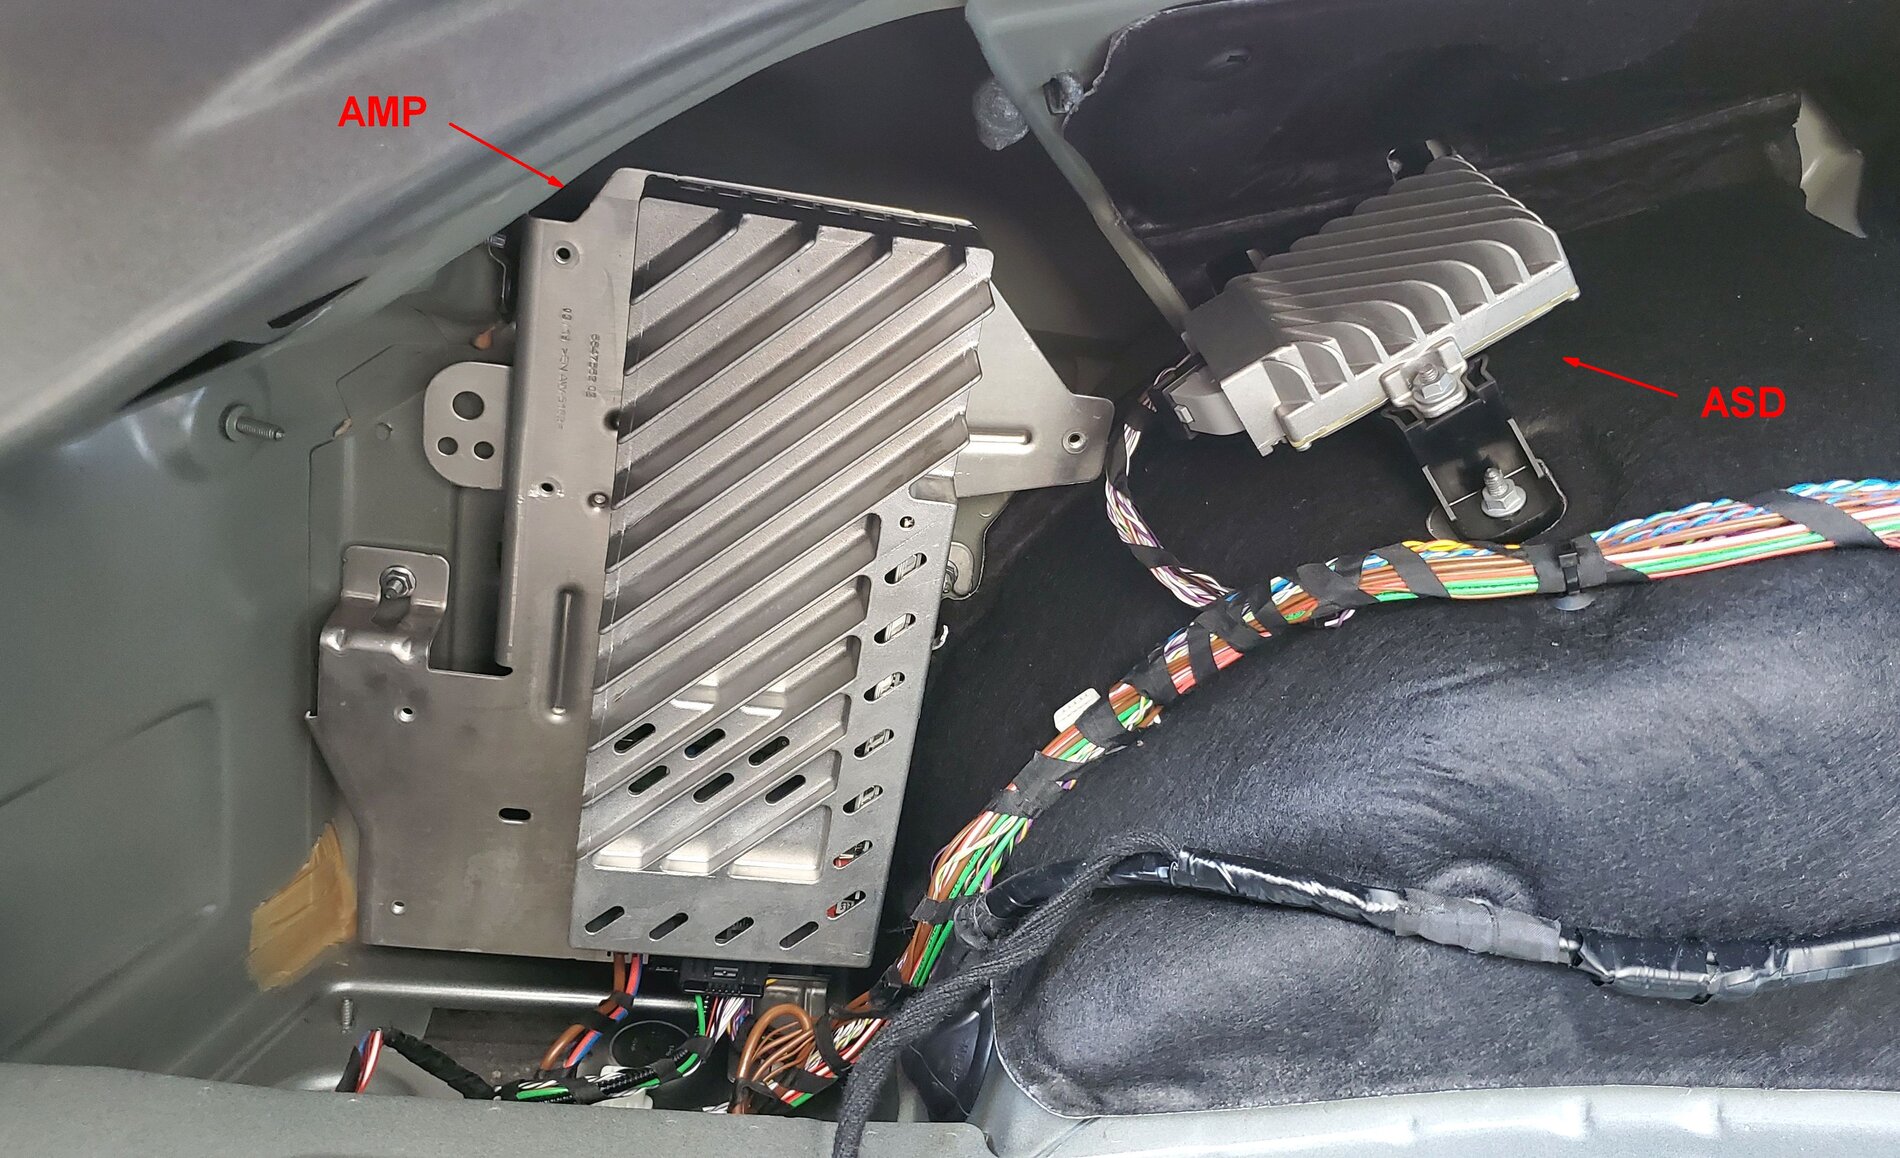 Supra Audio Amp, ASD Amp, and System Diagram | SupraMKV - 2020+ Toyota